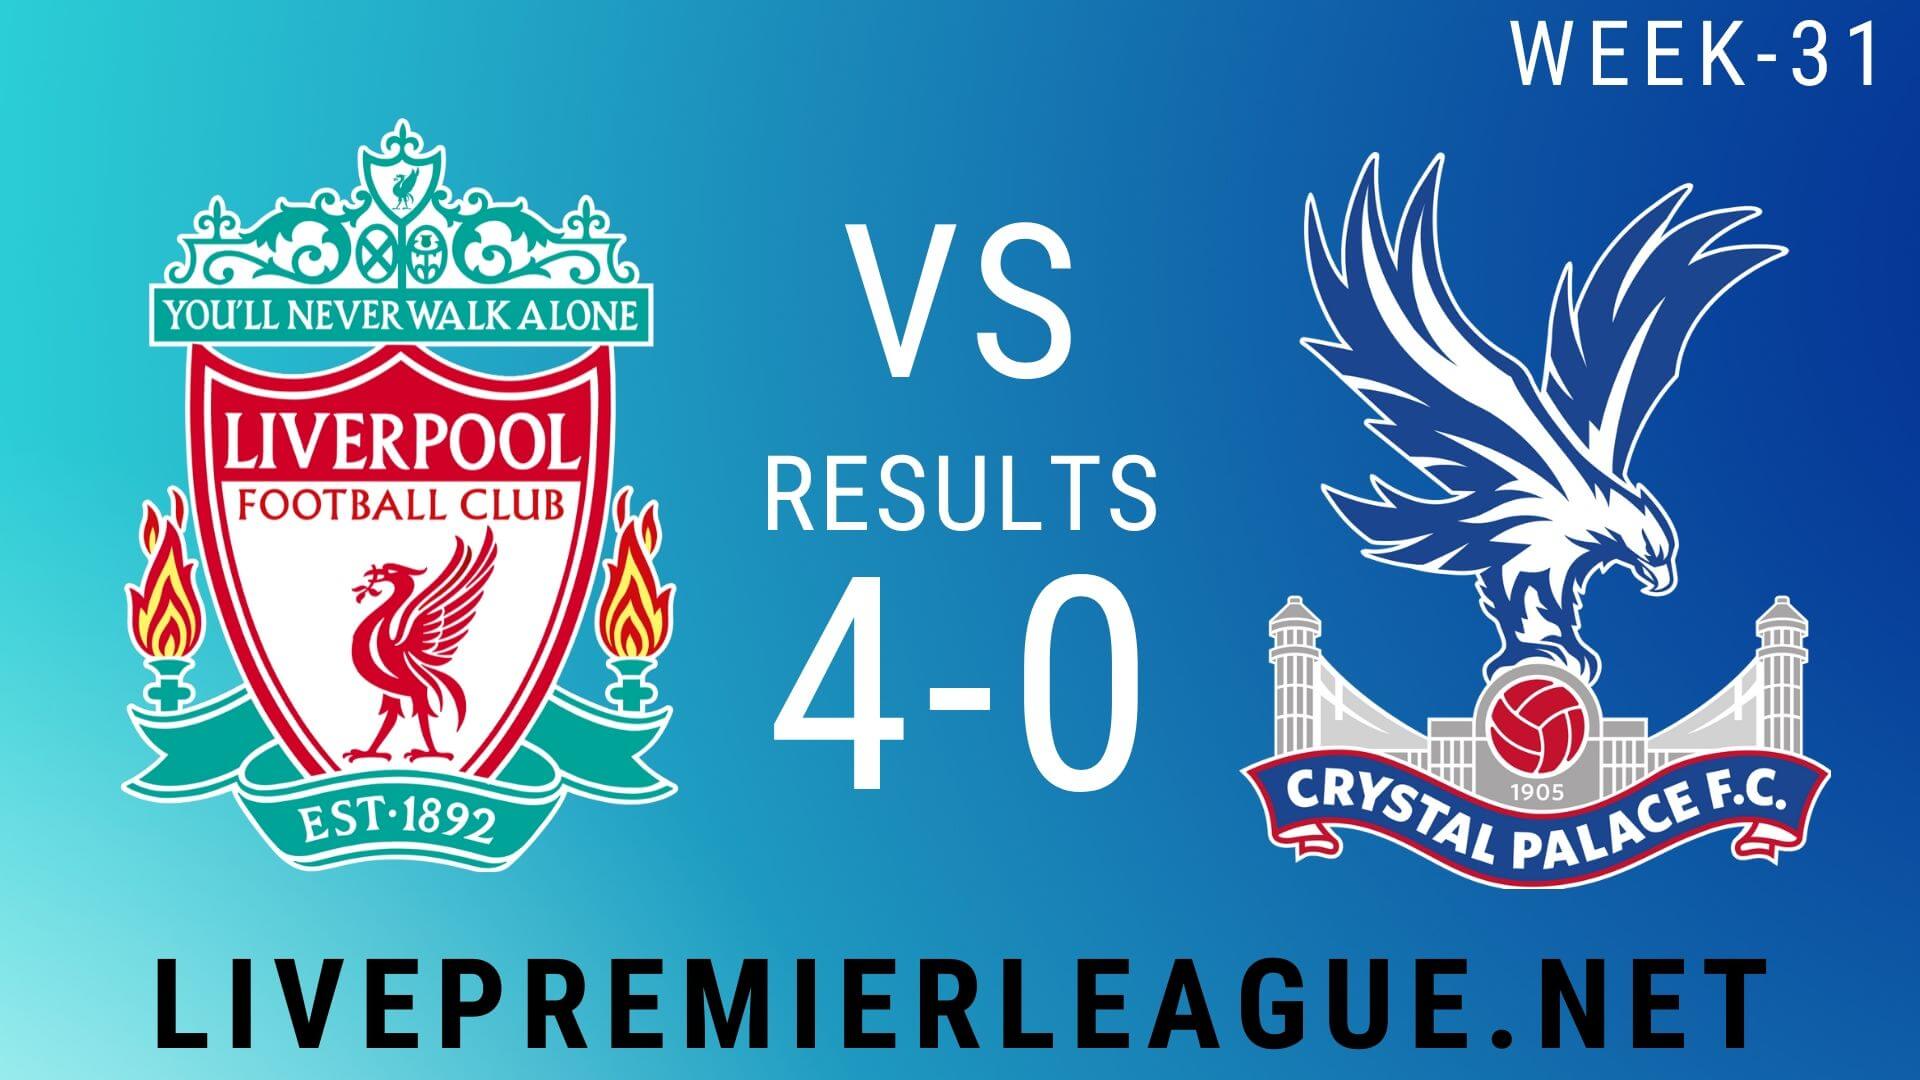 Liverpool Vs Crystal Palace | Week 31 Result 2020